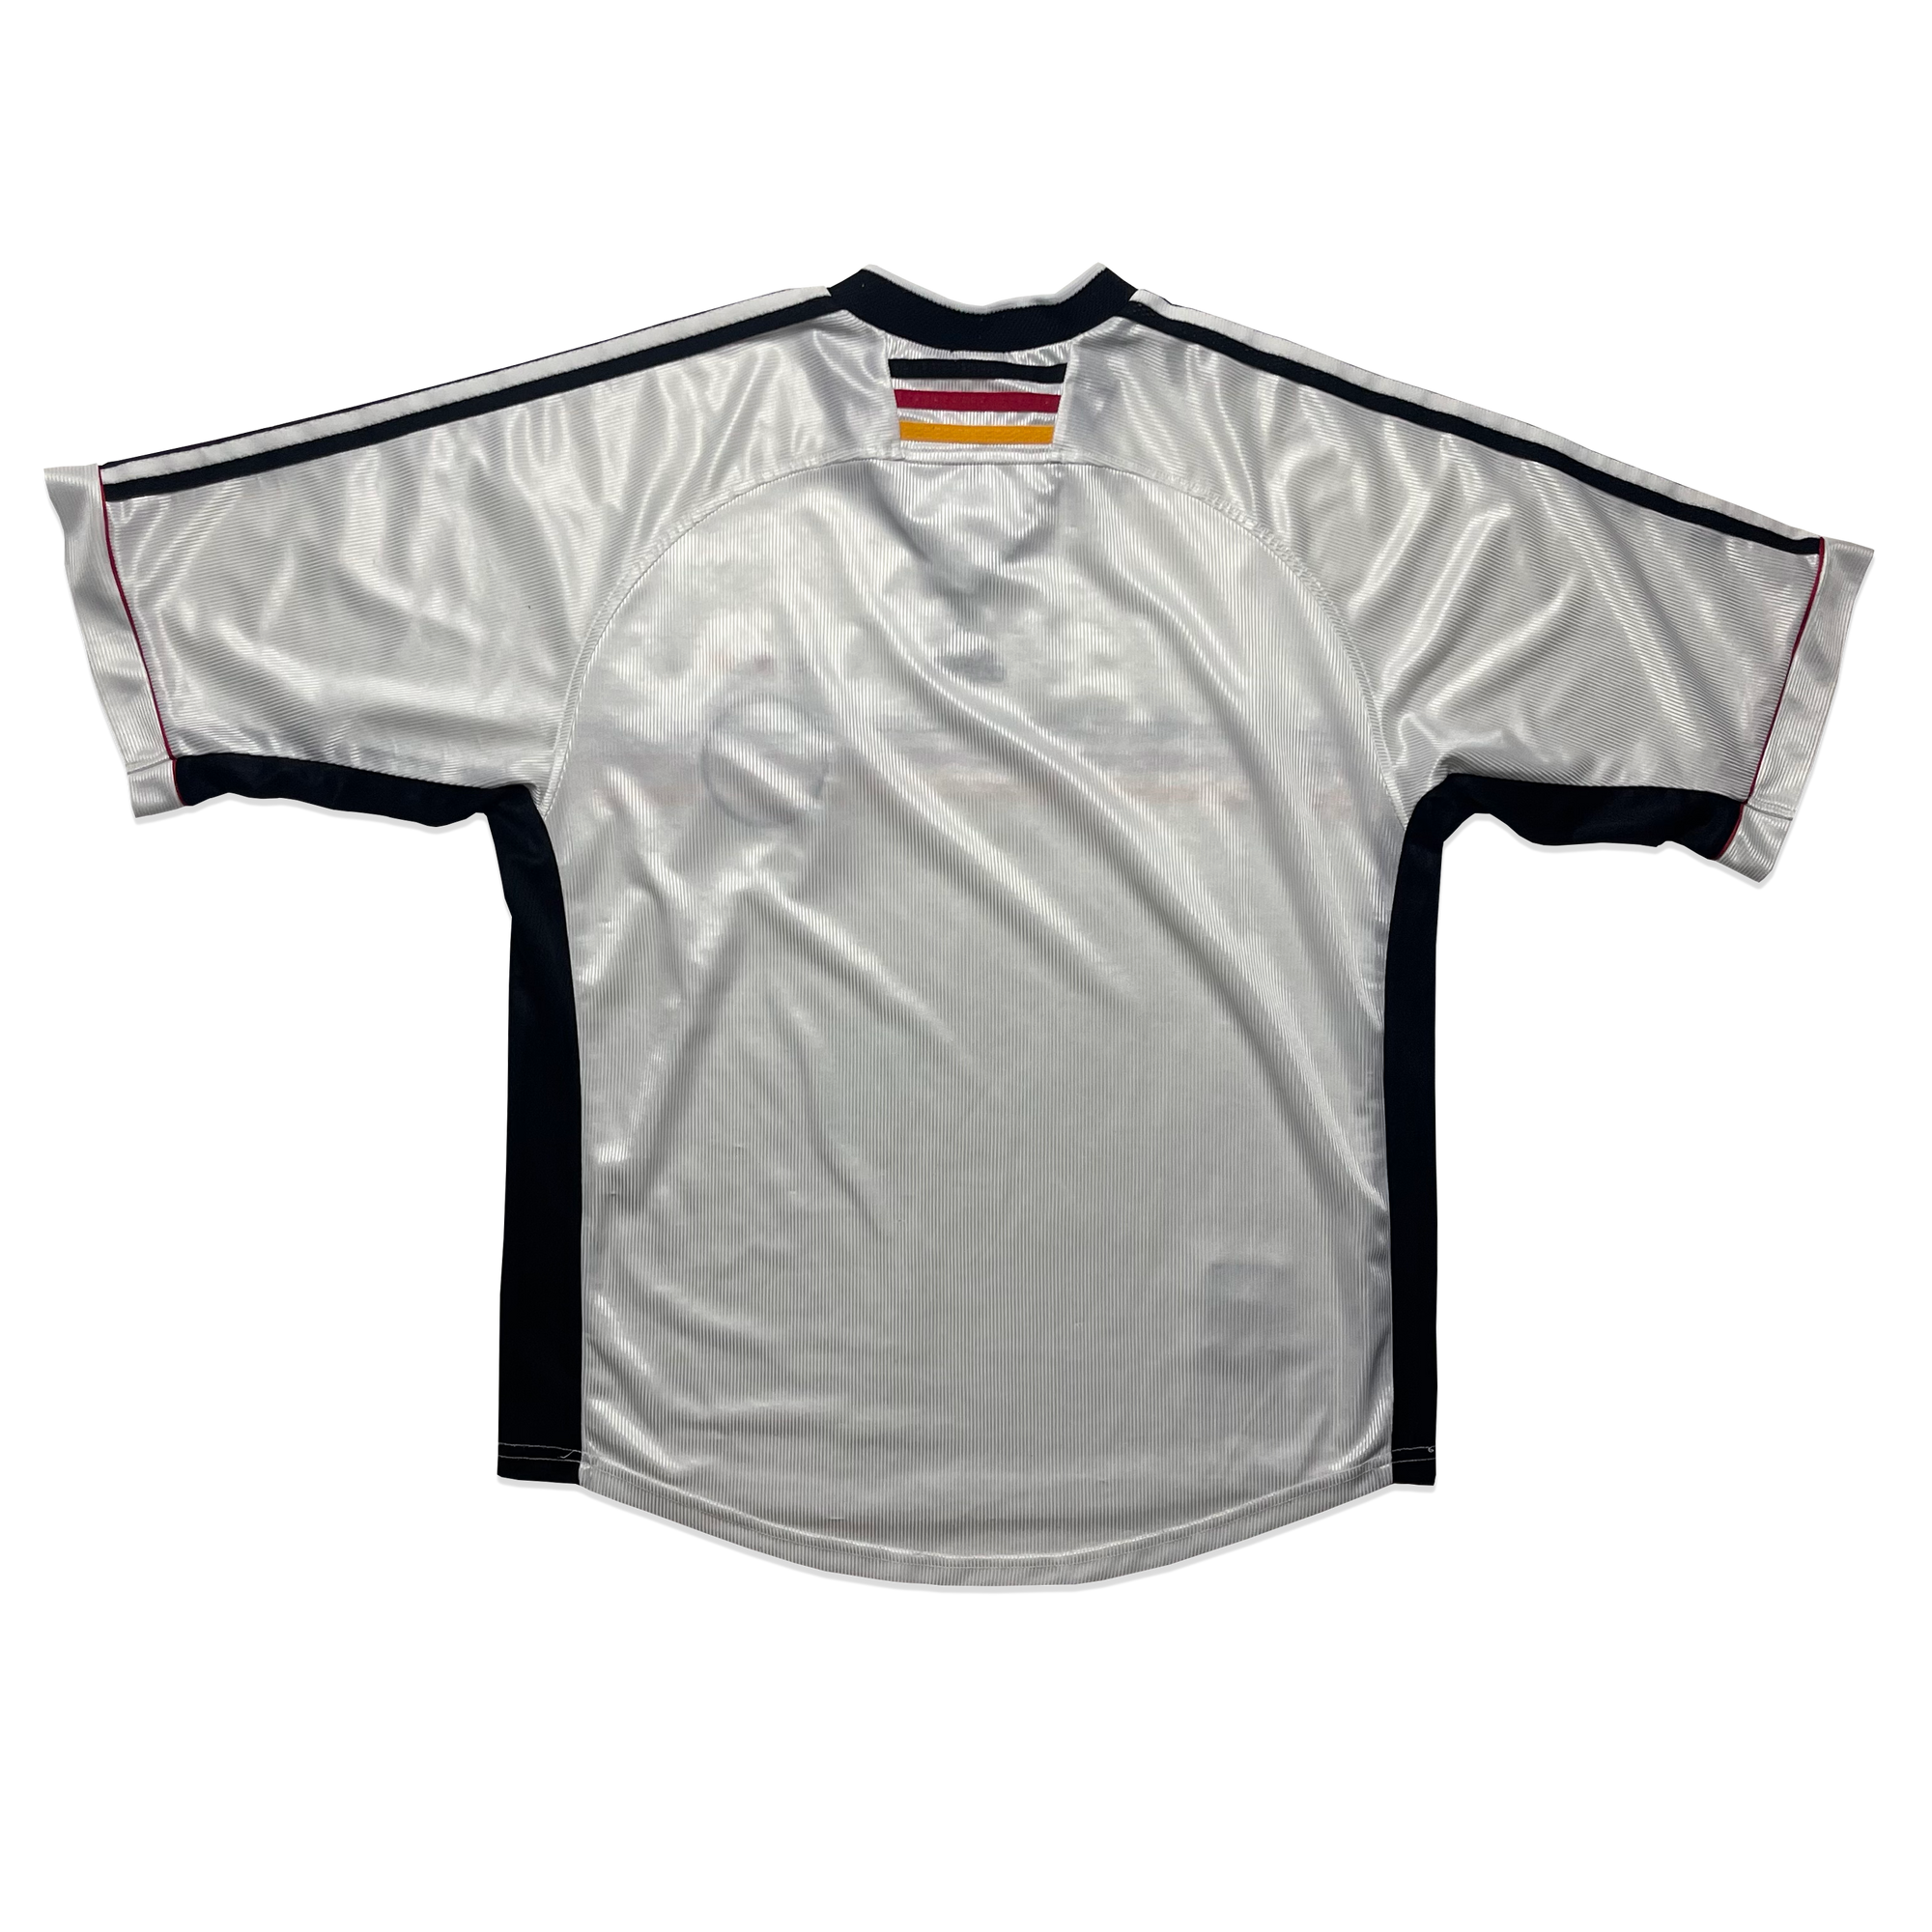 Maillot de Foot Allemagne - Adidas - Blanc